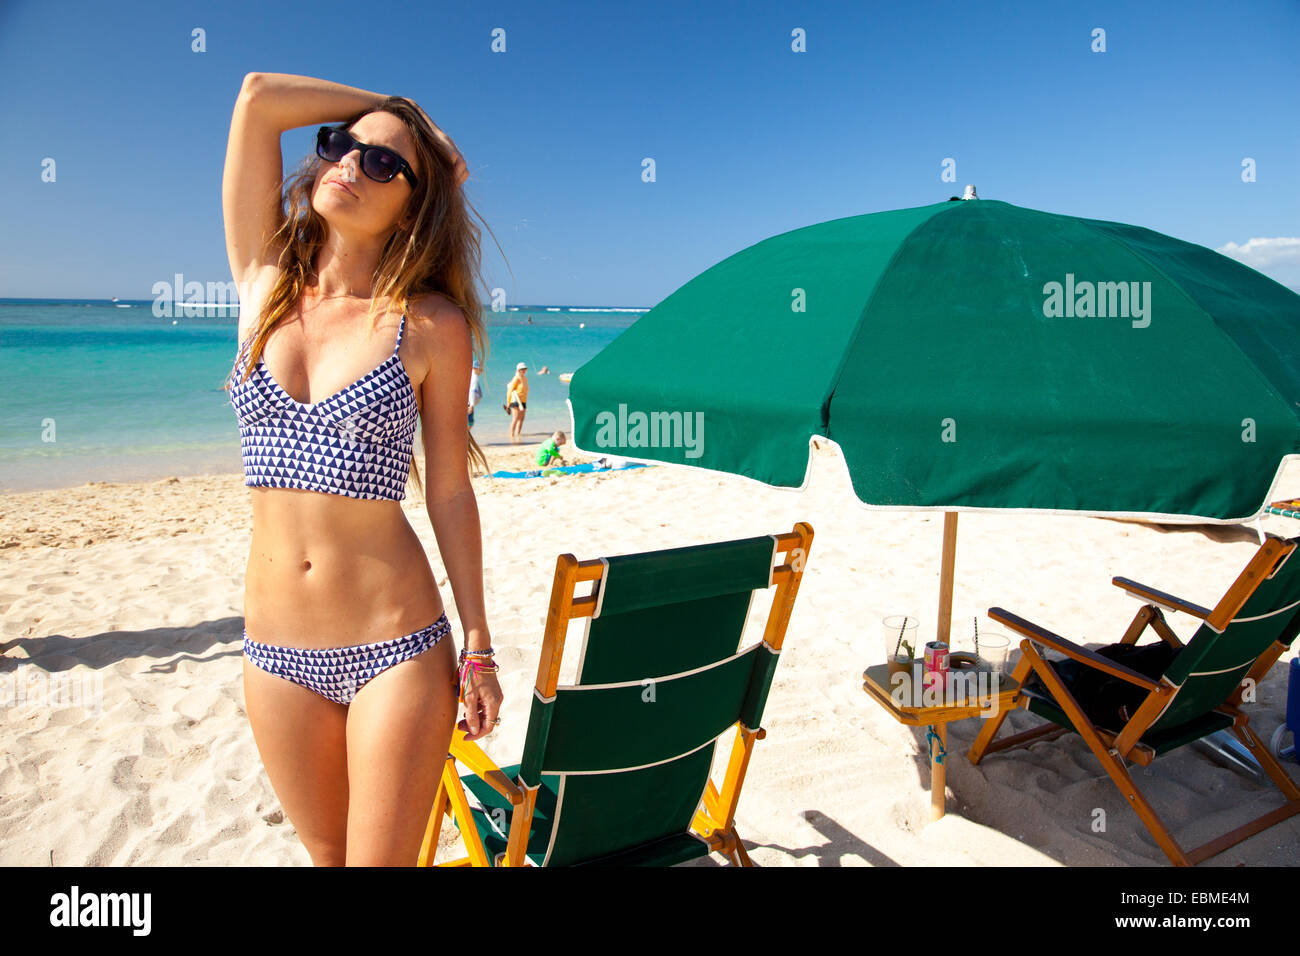 Attractive woman standing on beach in bikini near beach umbrella Stock Photo